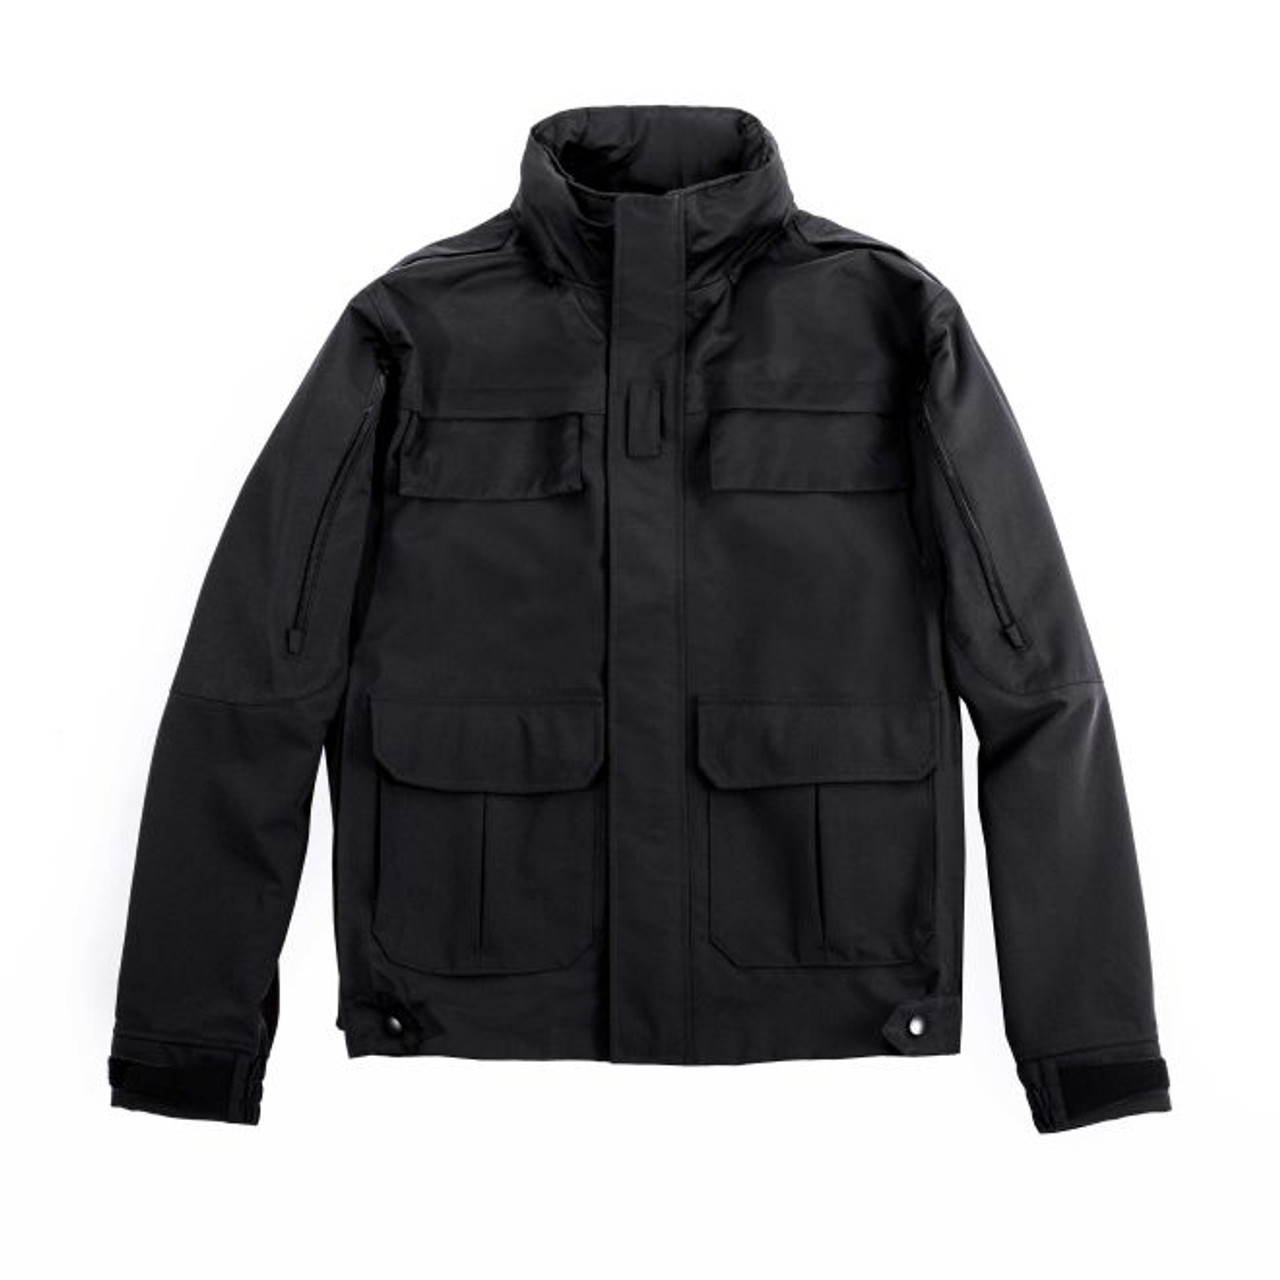 TacShell® Jacket | Blauer | East Coast Emergency Outfitter